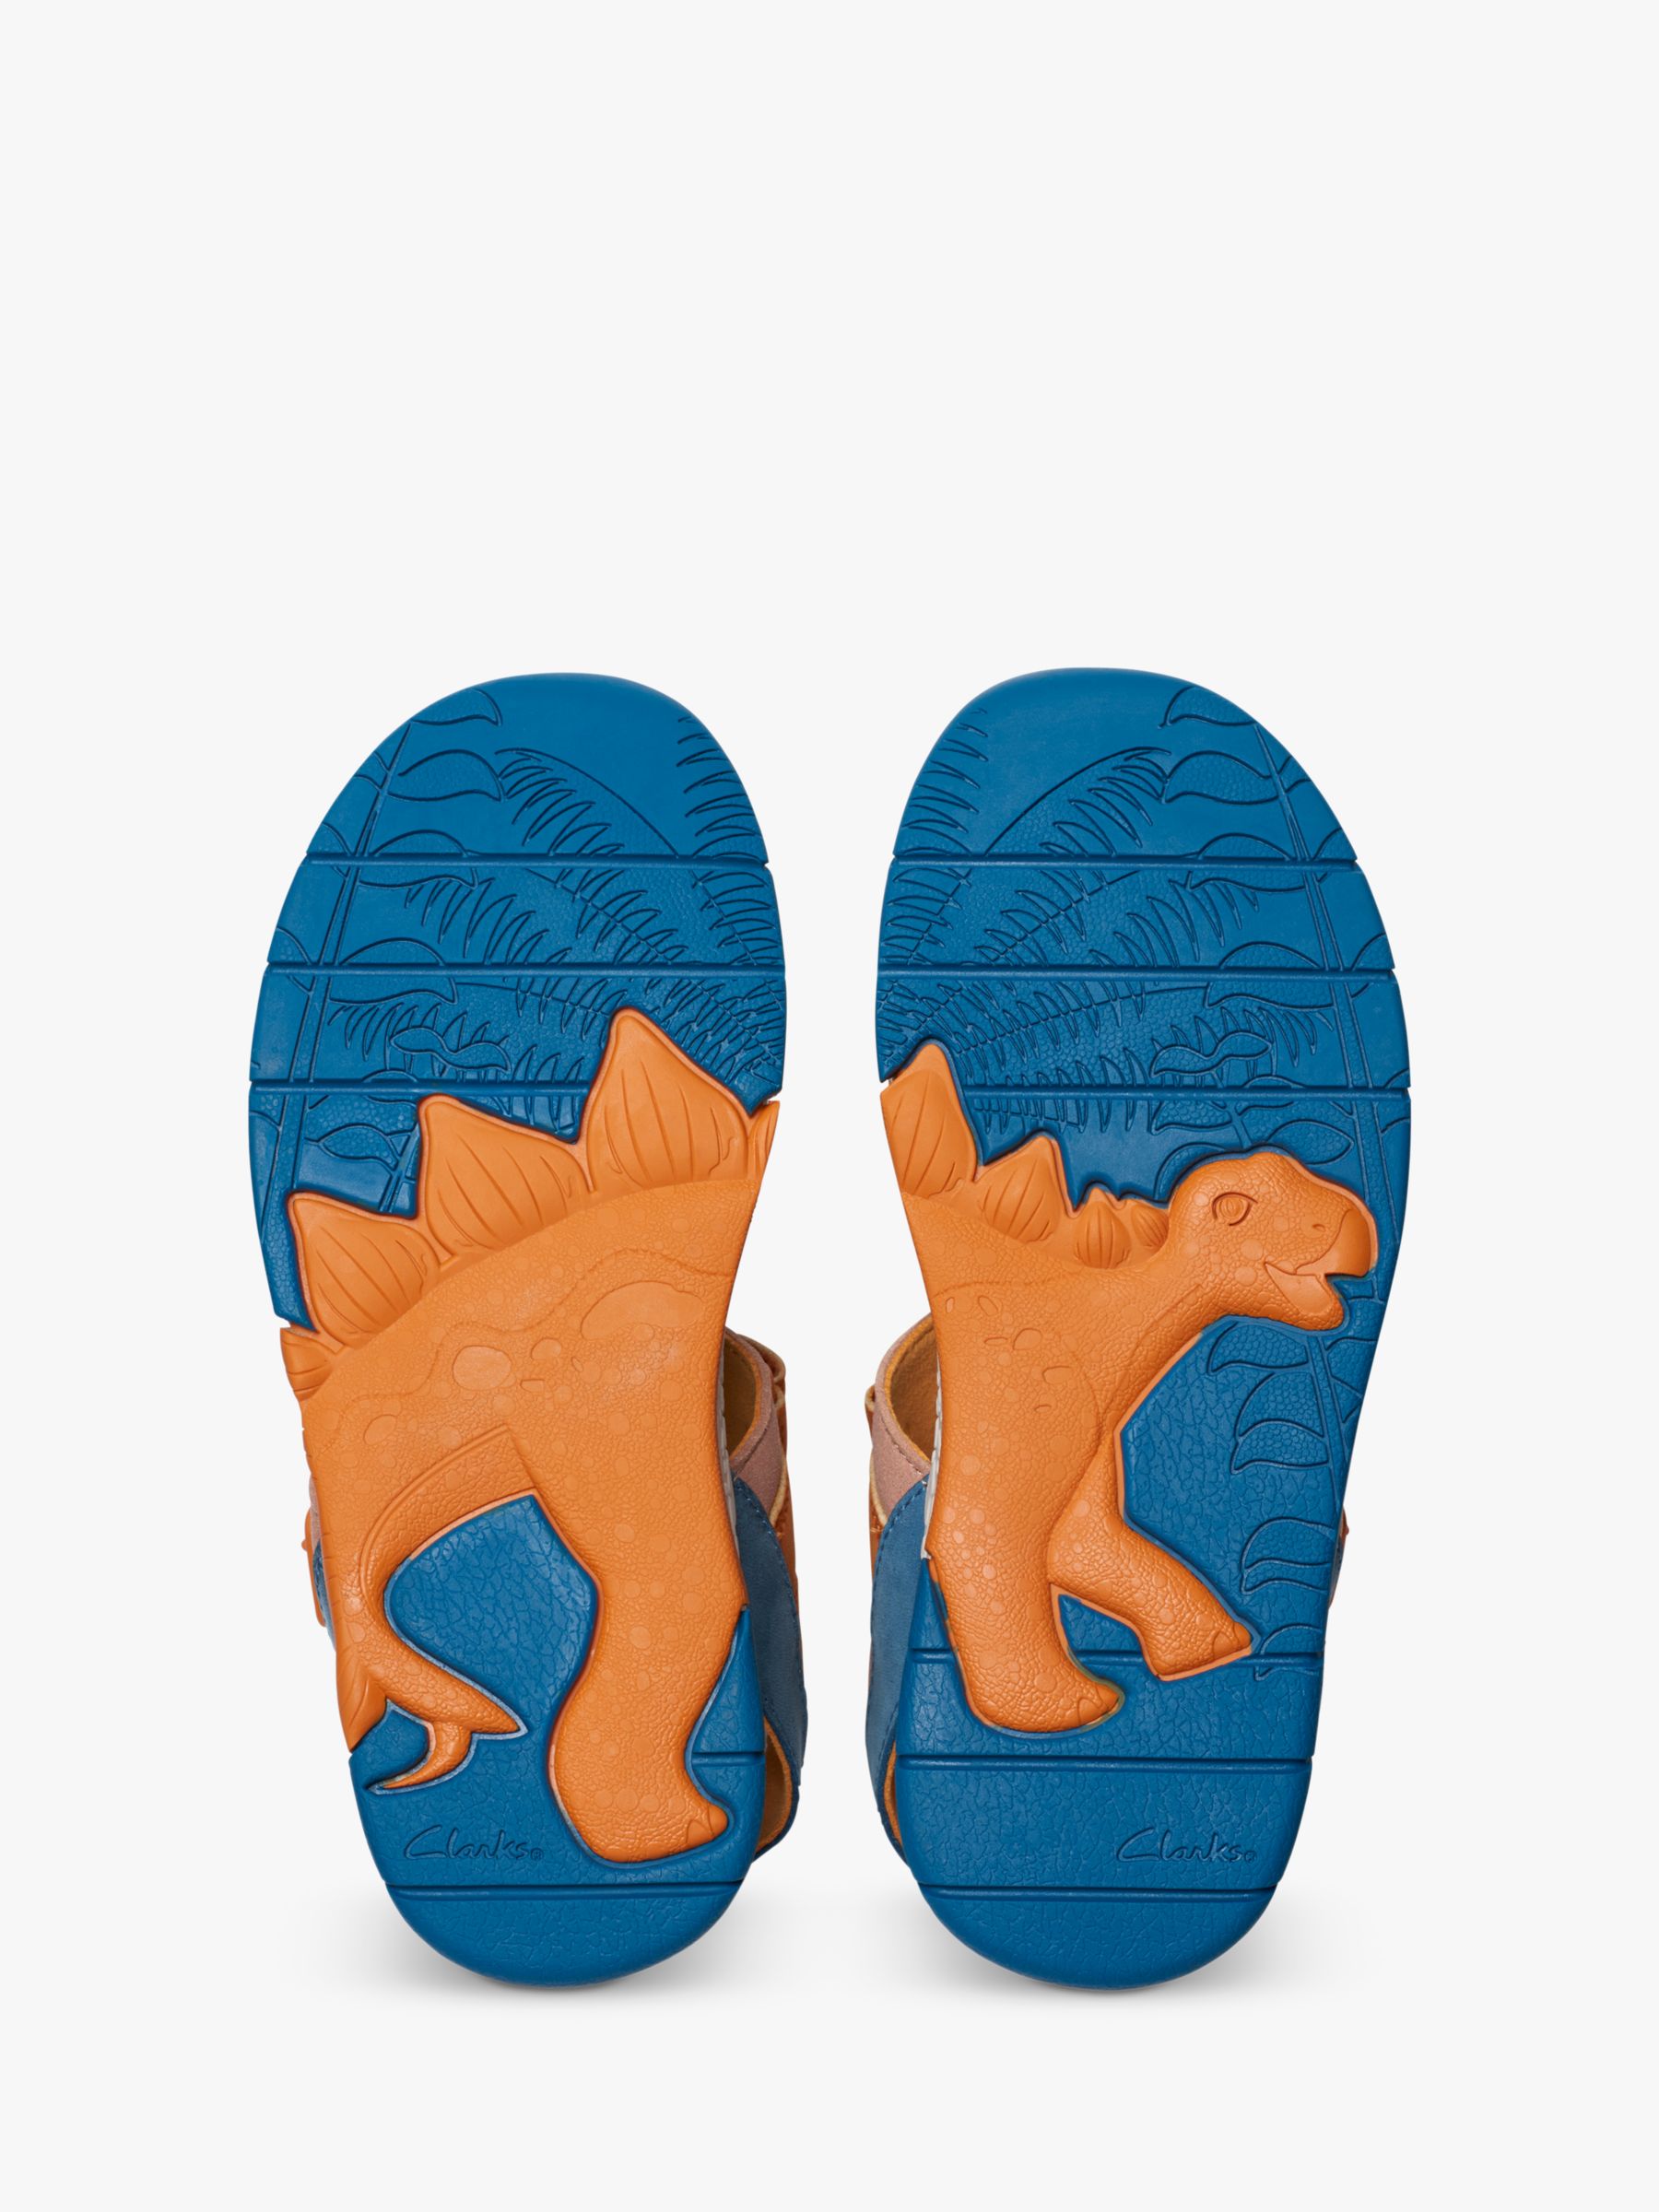 Clarks Kids' Spiney See Dinosaur Leather Sandals, Tan/Multi, 11G Jnr